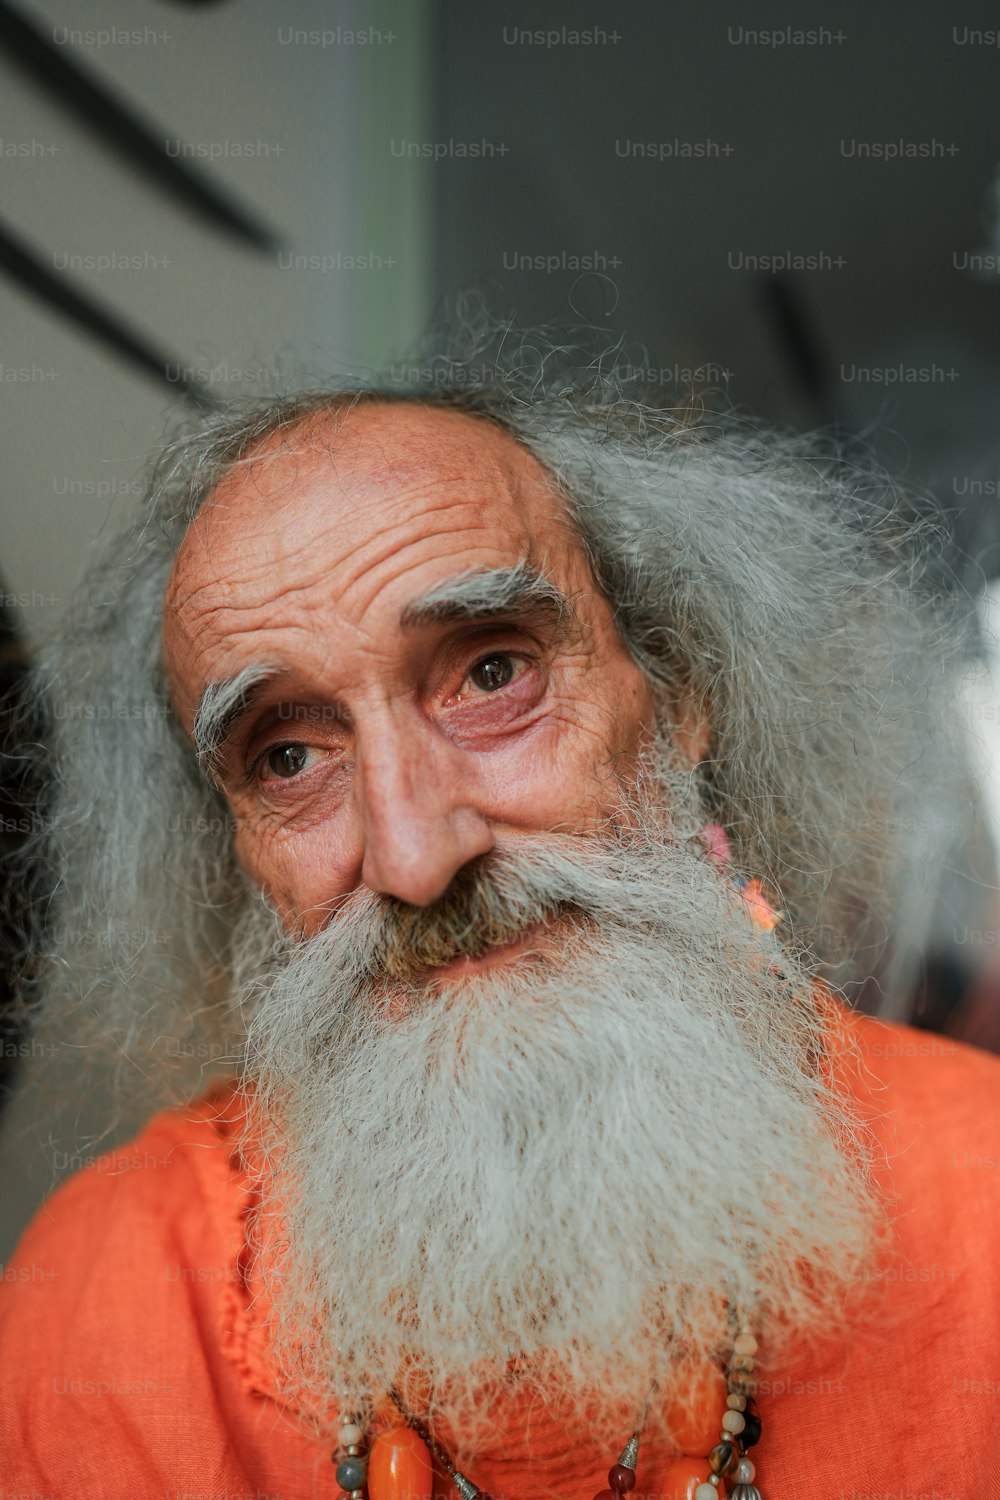 an old man with a long beard and orange shirt